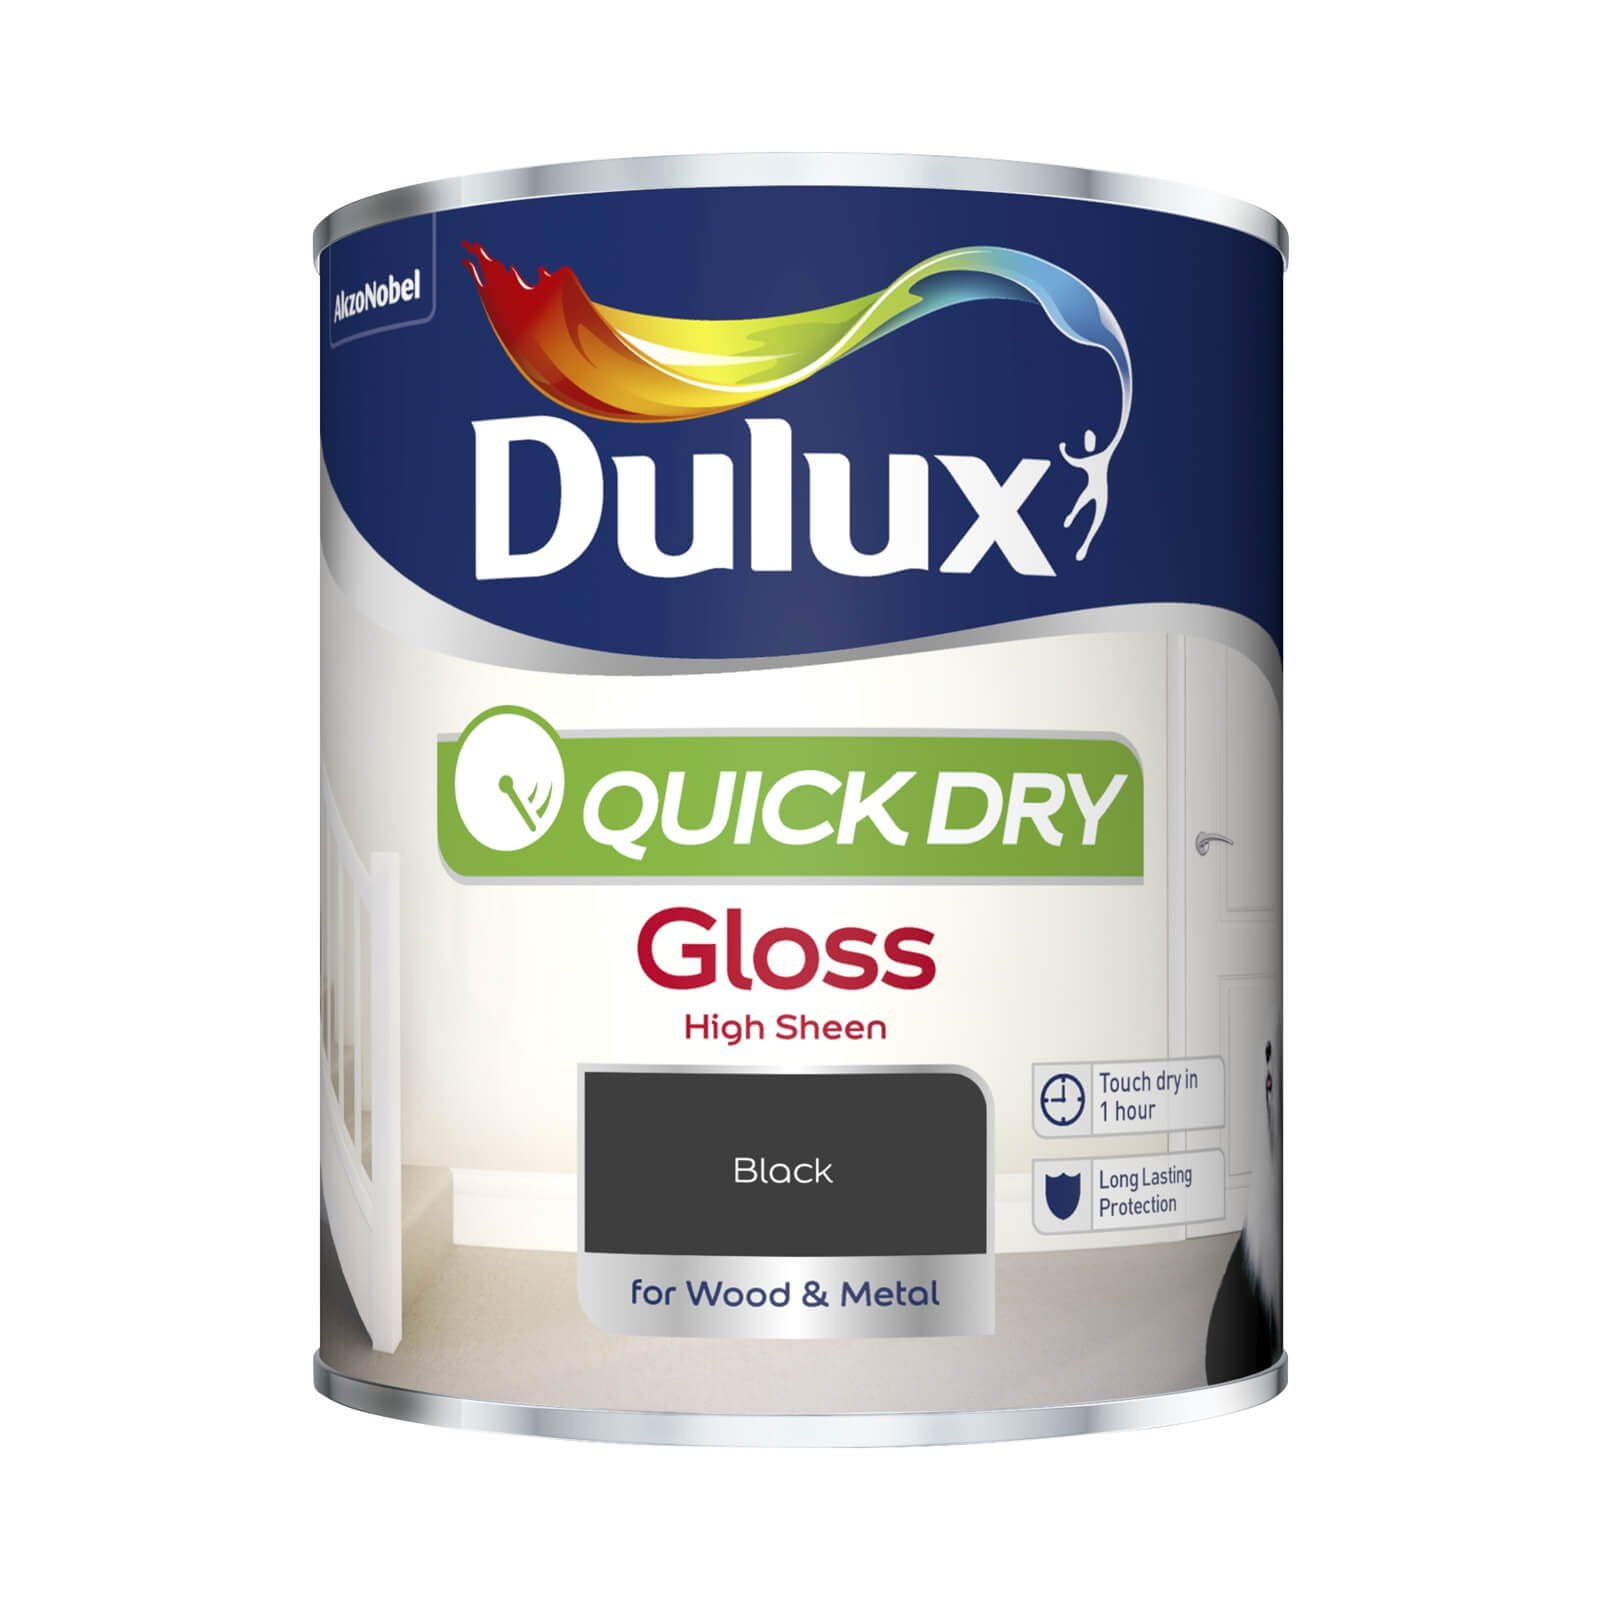 Dulux Quick Dry Gloss Paint Black - 750ml